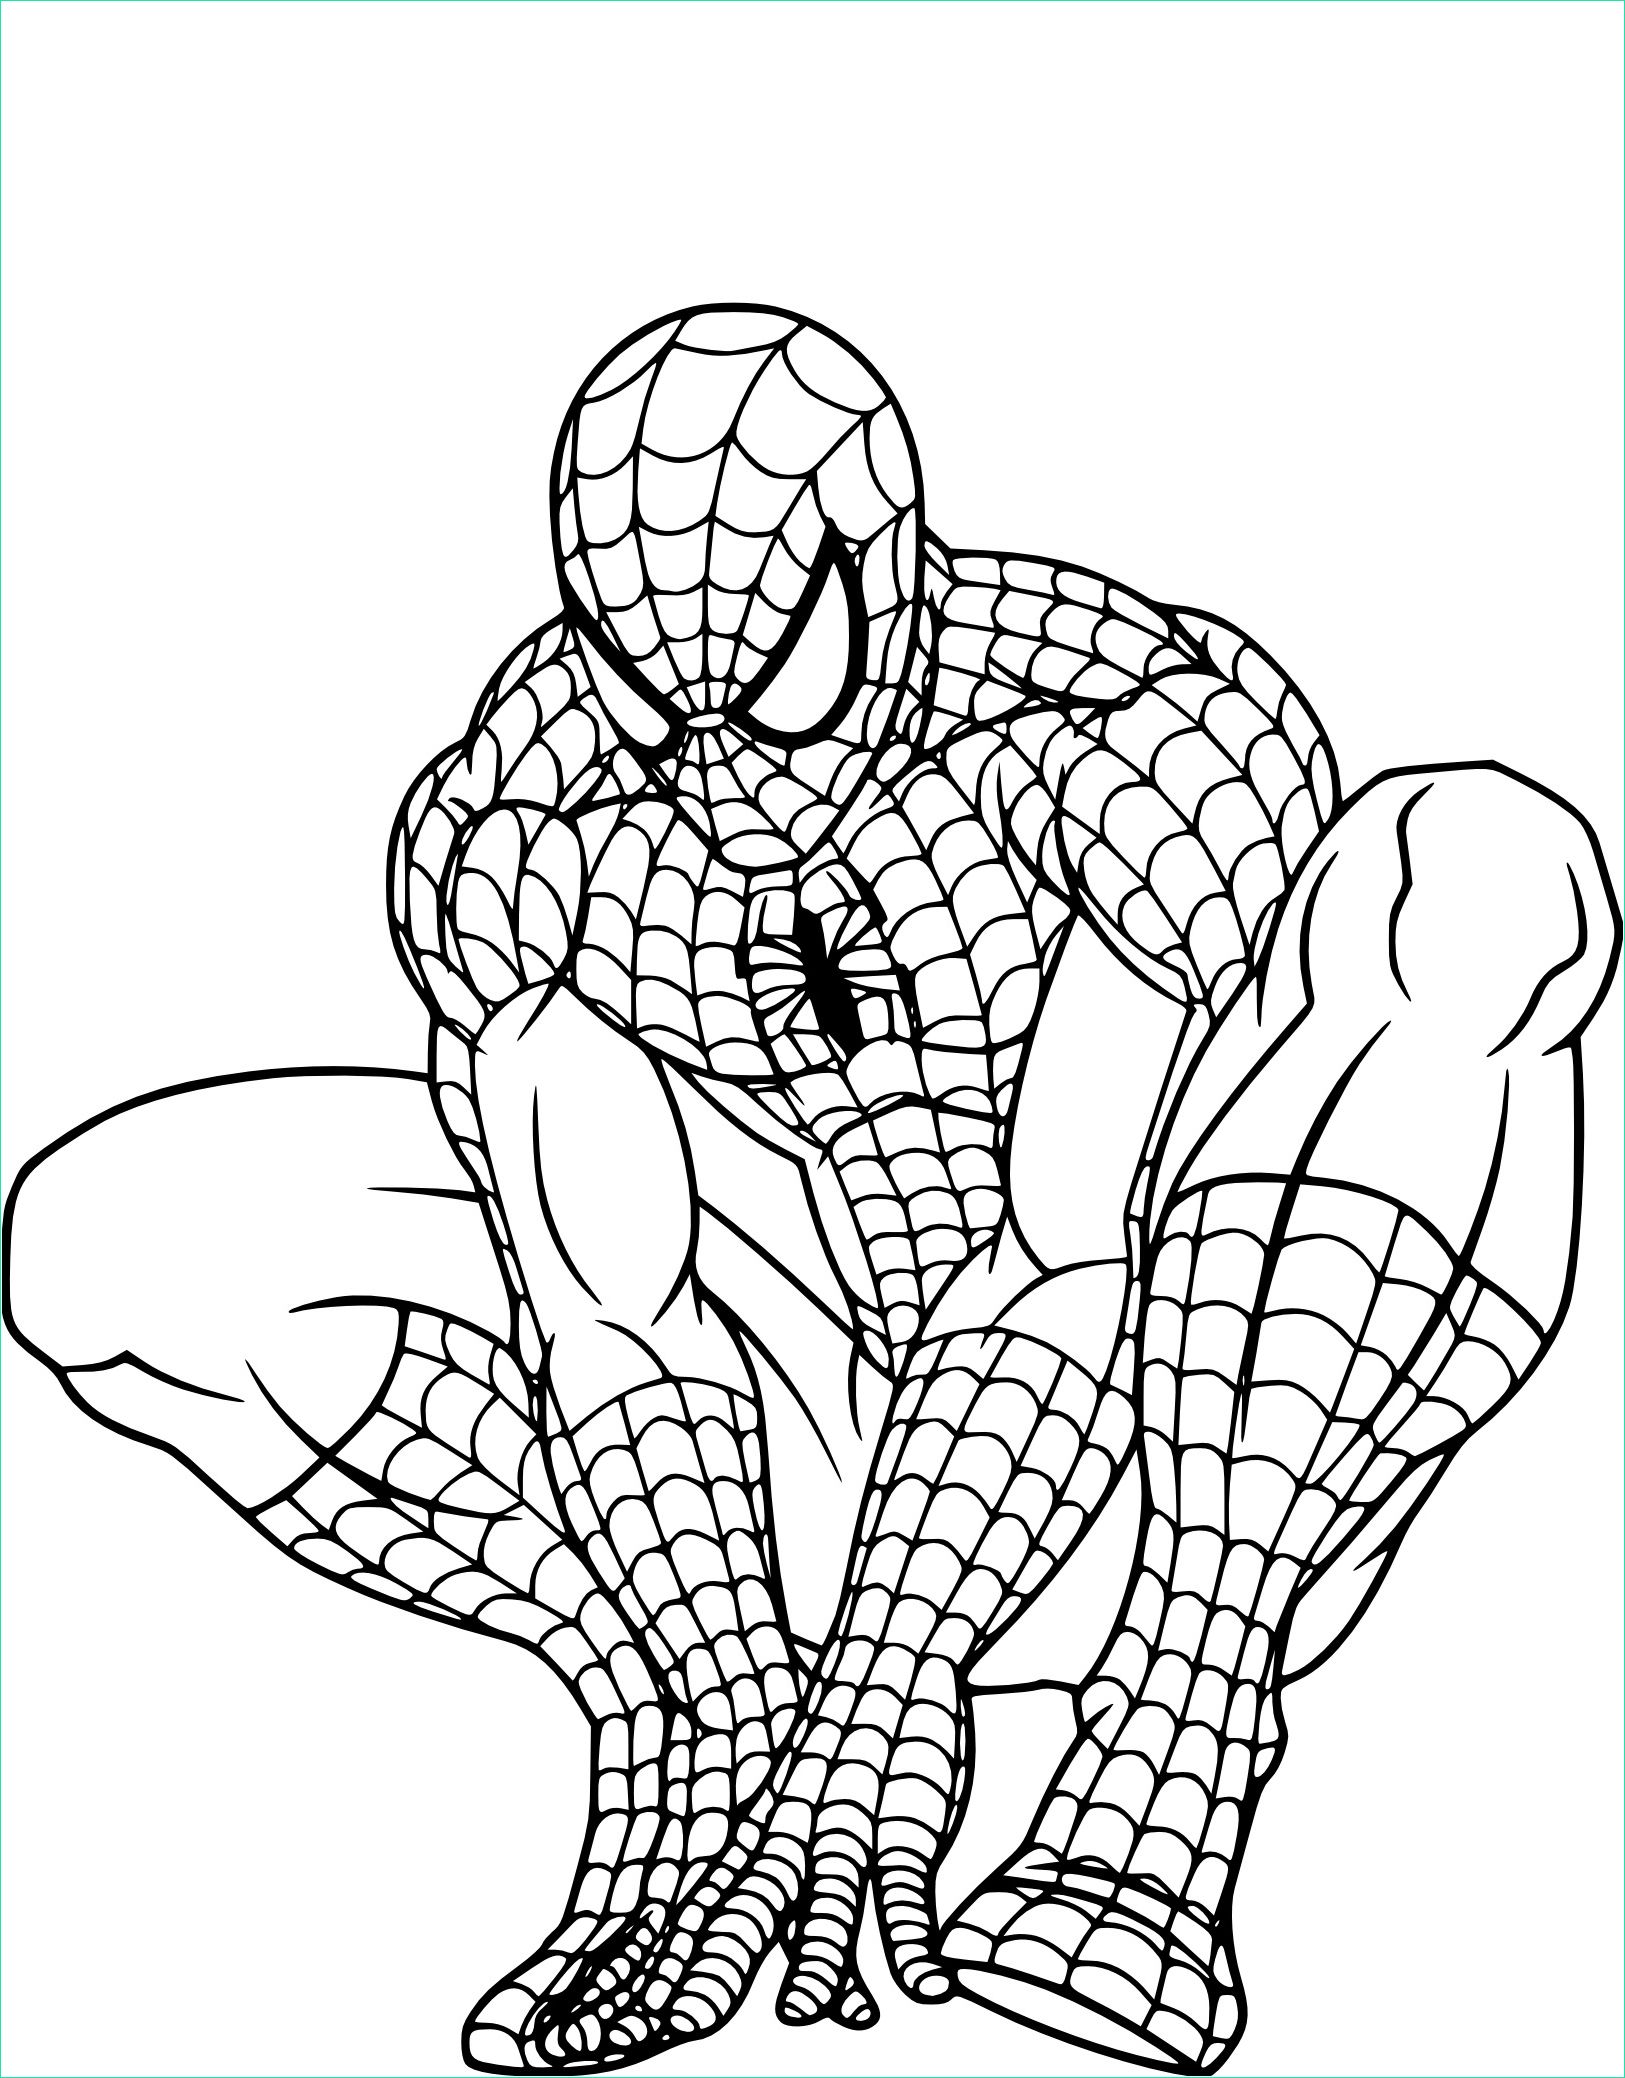 Dessin De Spider Man Inspirant Photos 15 Classique Coloriage Spider Man Image Coloriage